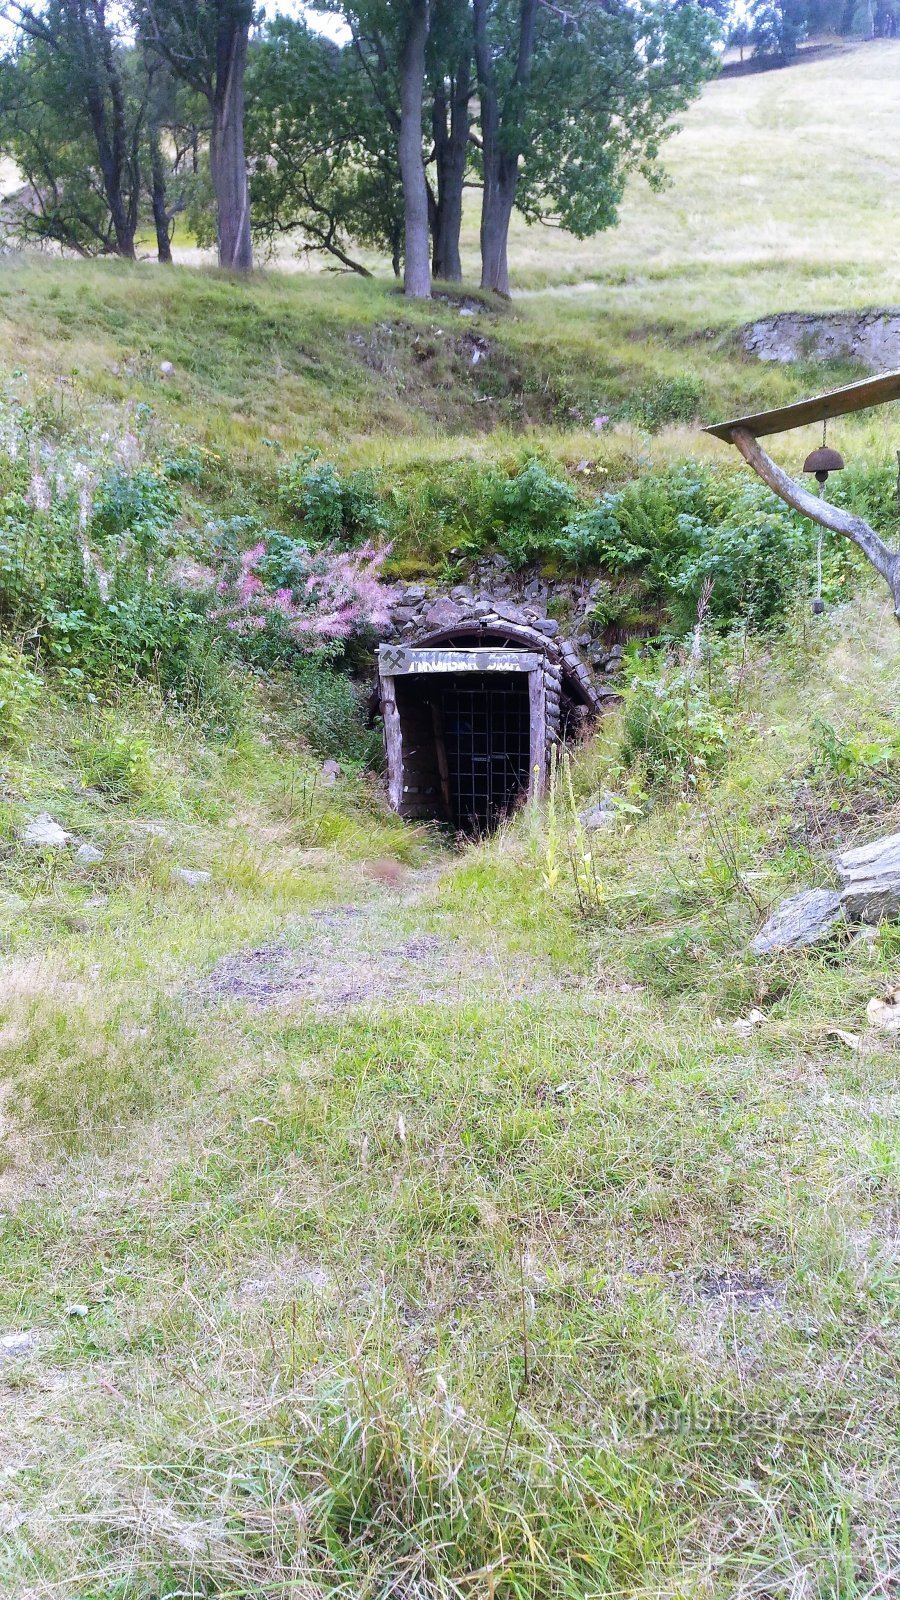 Nicholas' tunnel